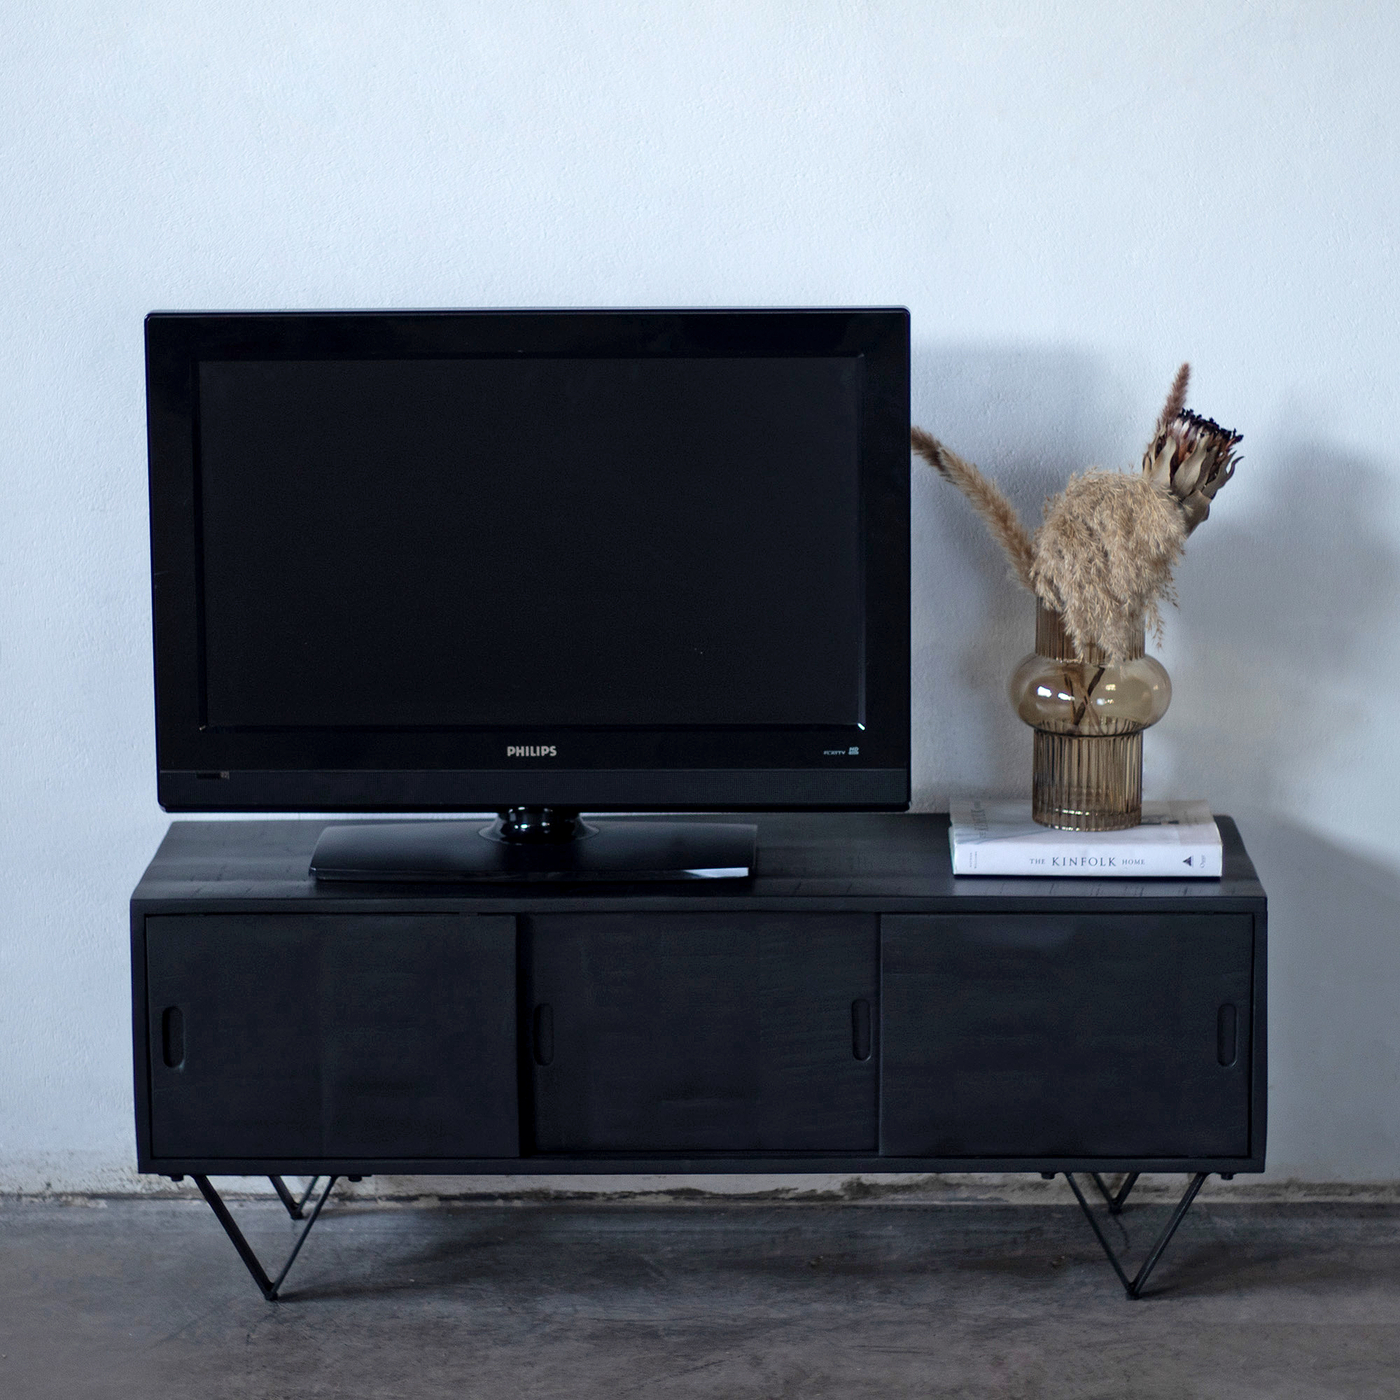 Mens Streven Overleving Tv-meubel Ubud Zwart 120cm kopen? ⏩ Giga Meubel! - Giga Meubel